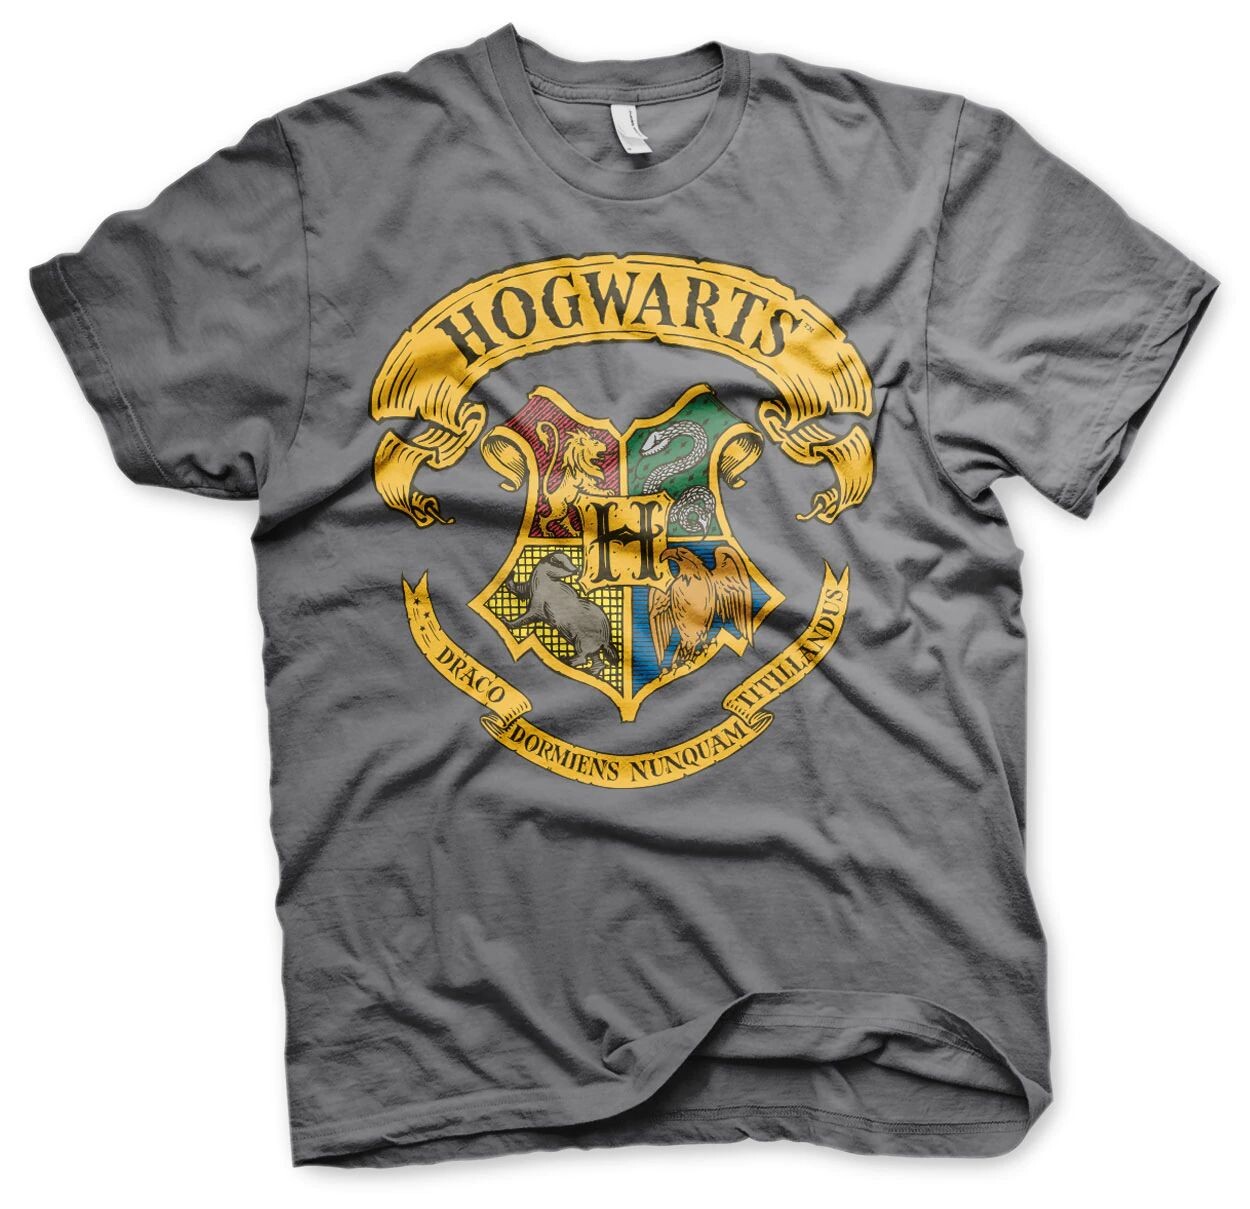 Bezwaar Kader stem Harry Potter - Hogwarts Crest | Clothes and accessories for merchandise fans